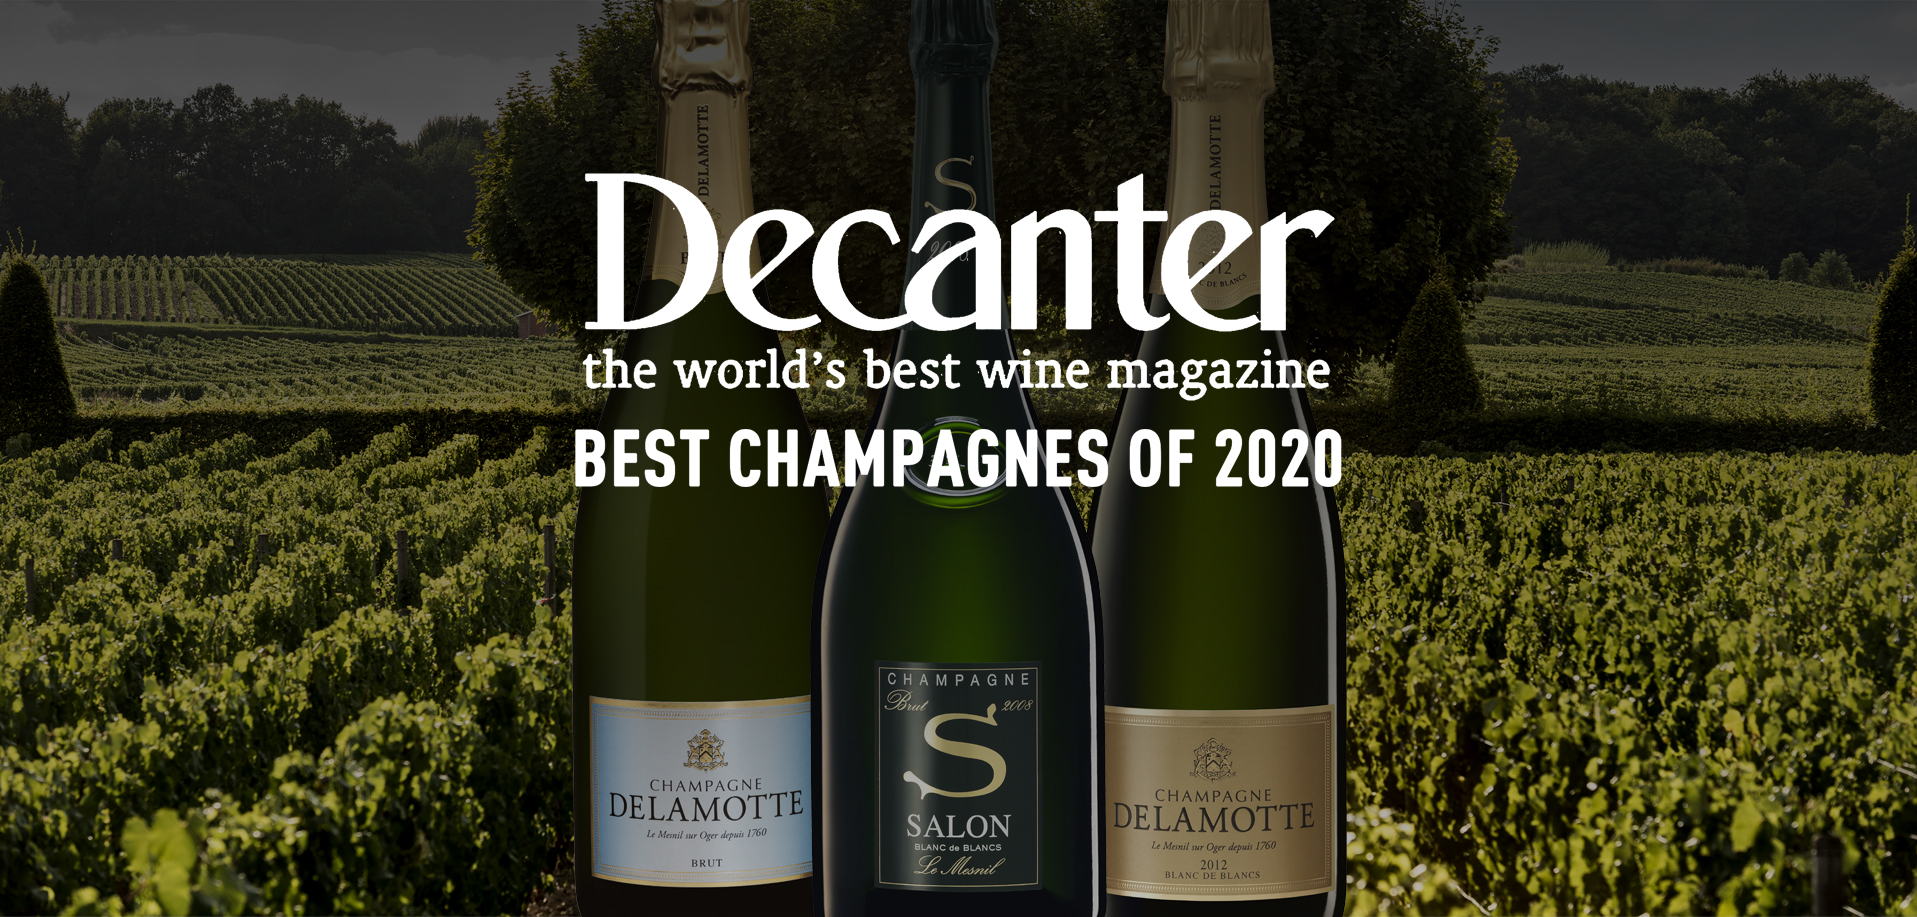 Salon & Delamotte beste champagnes 2020 volgens Decanter